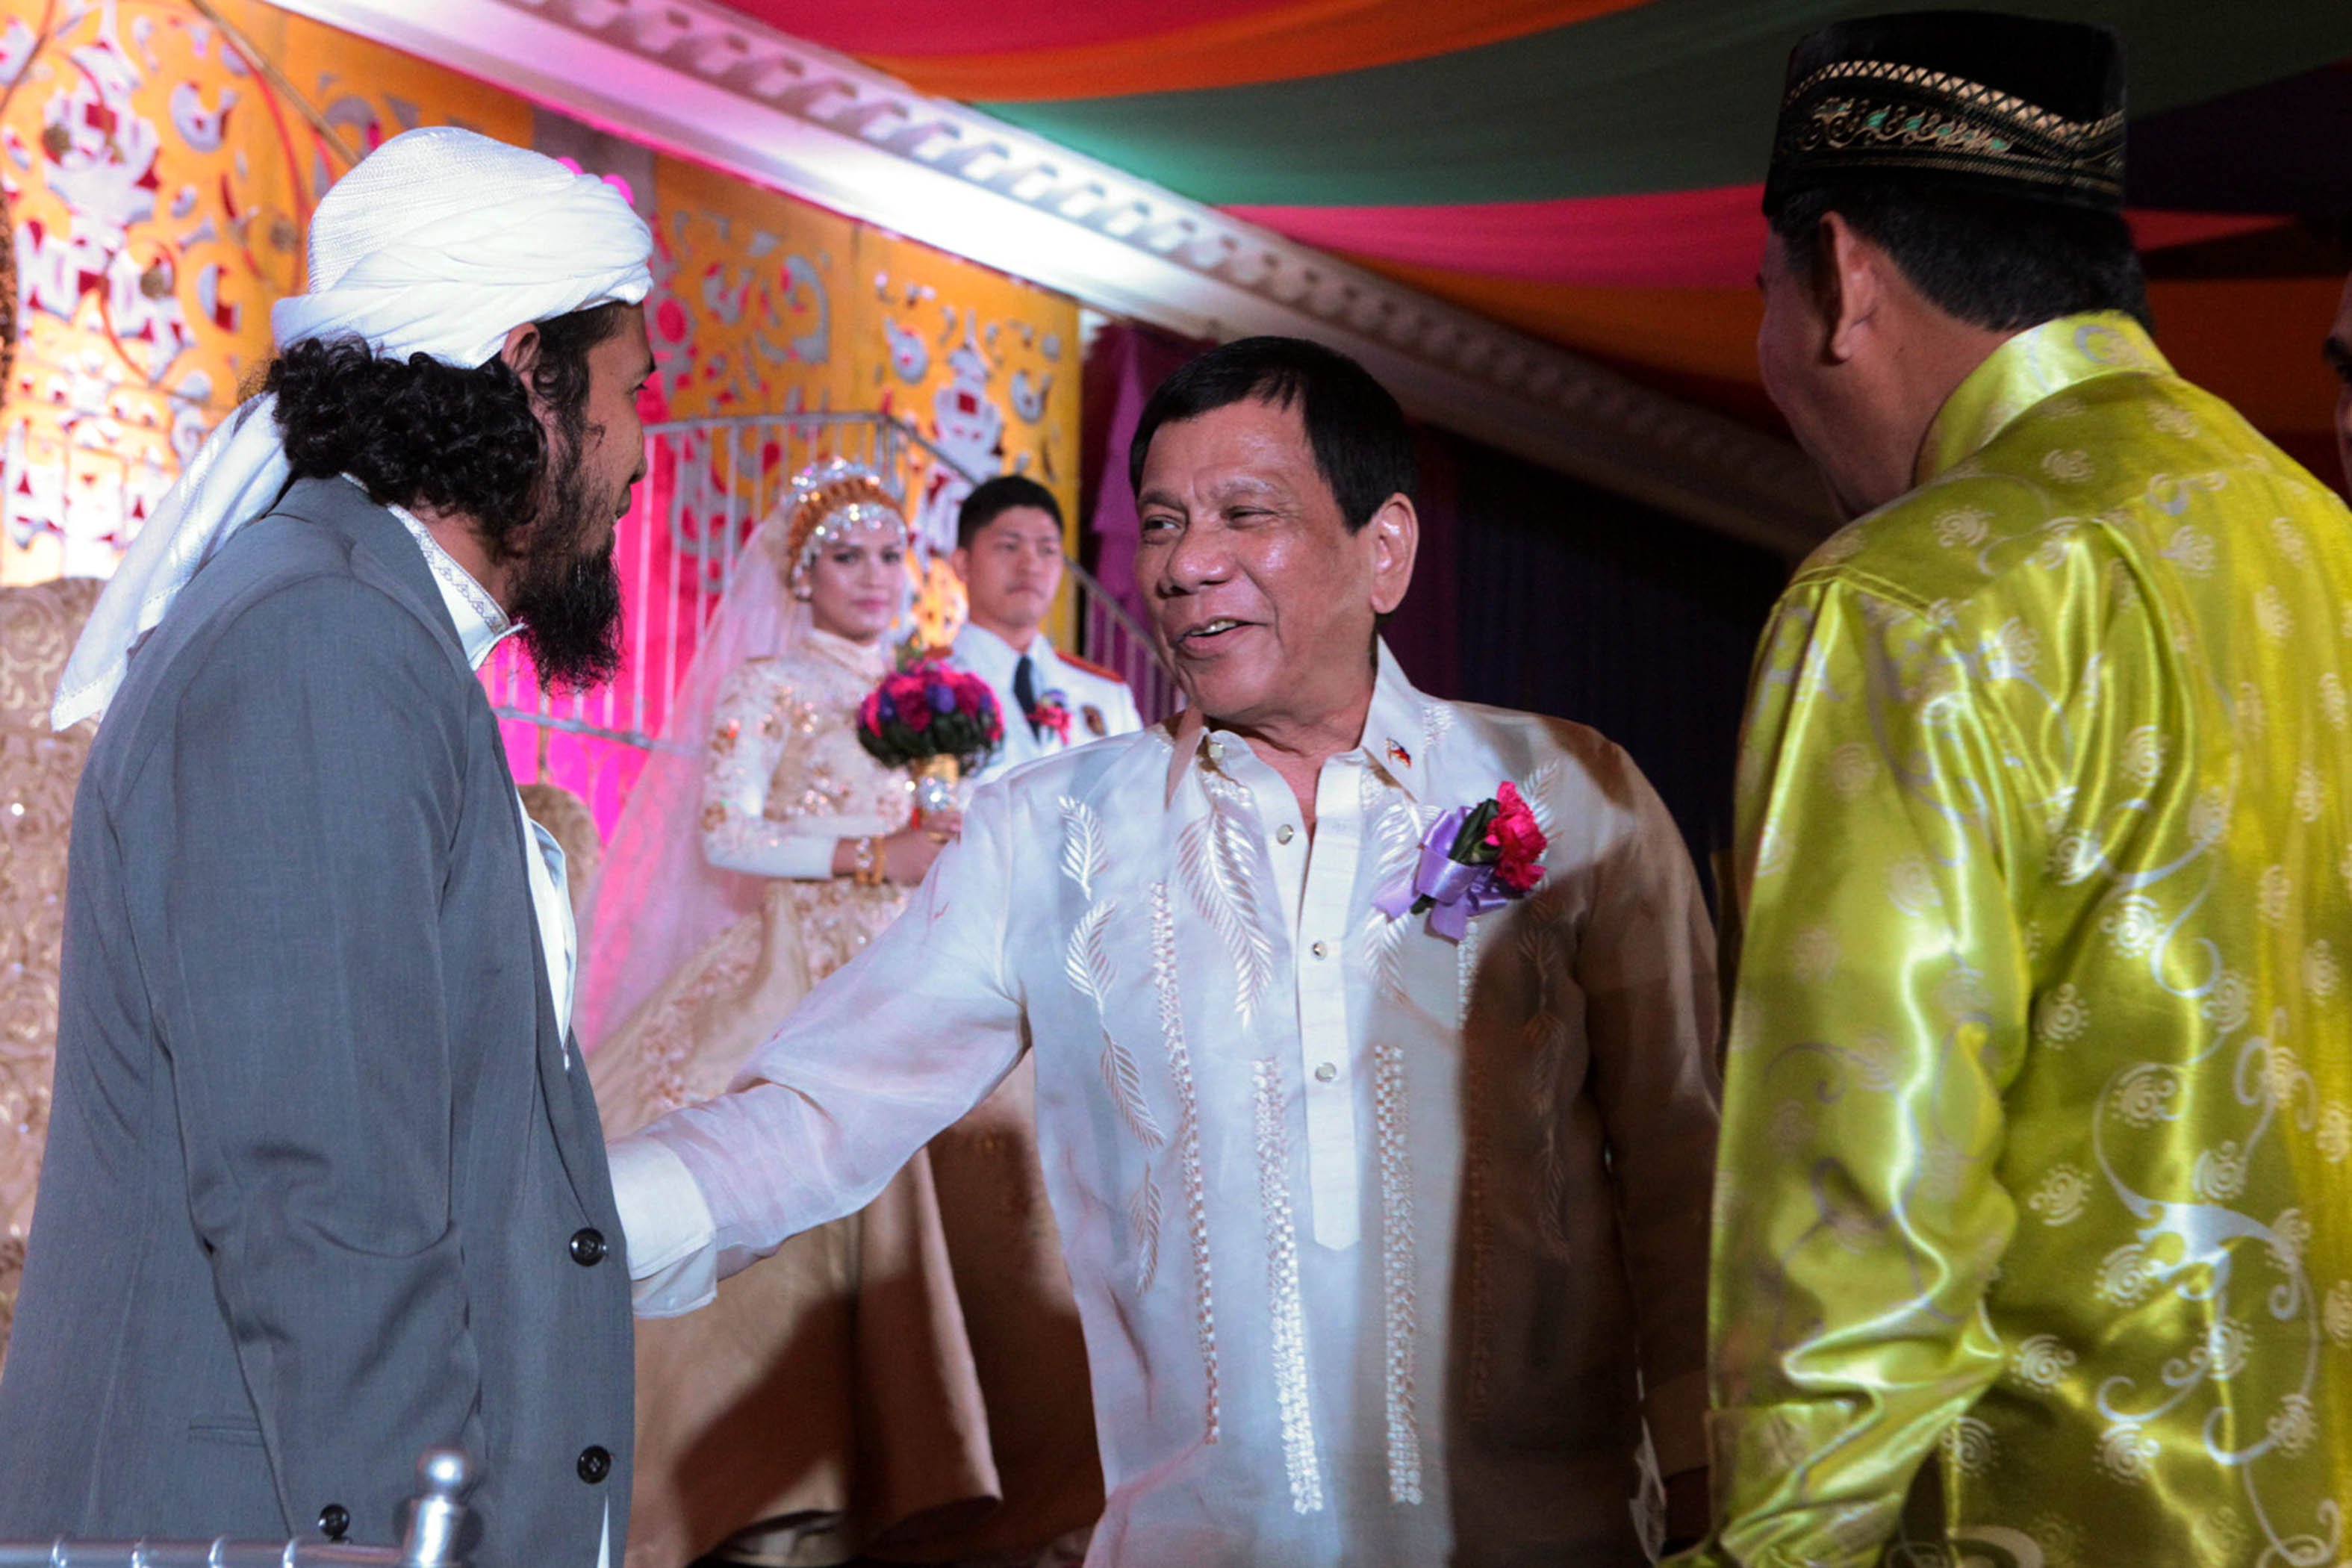 Pres. Duterte greets the Imams who presided over the wedding of Kinang-Hosmillo nuptials in Zamboanga City